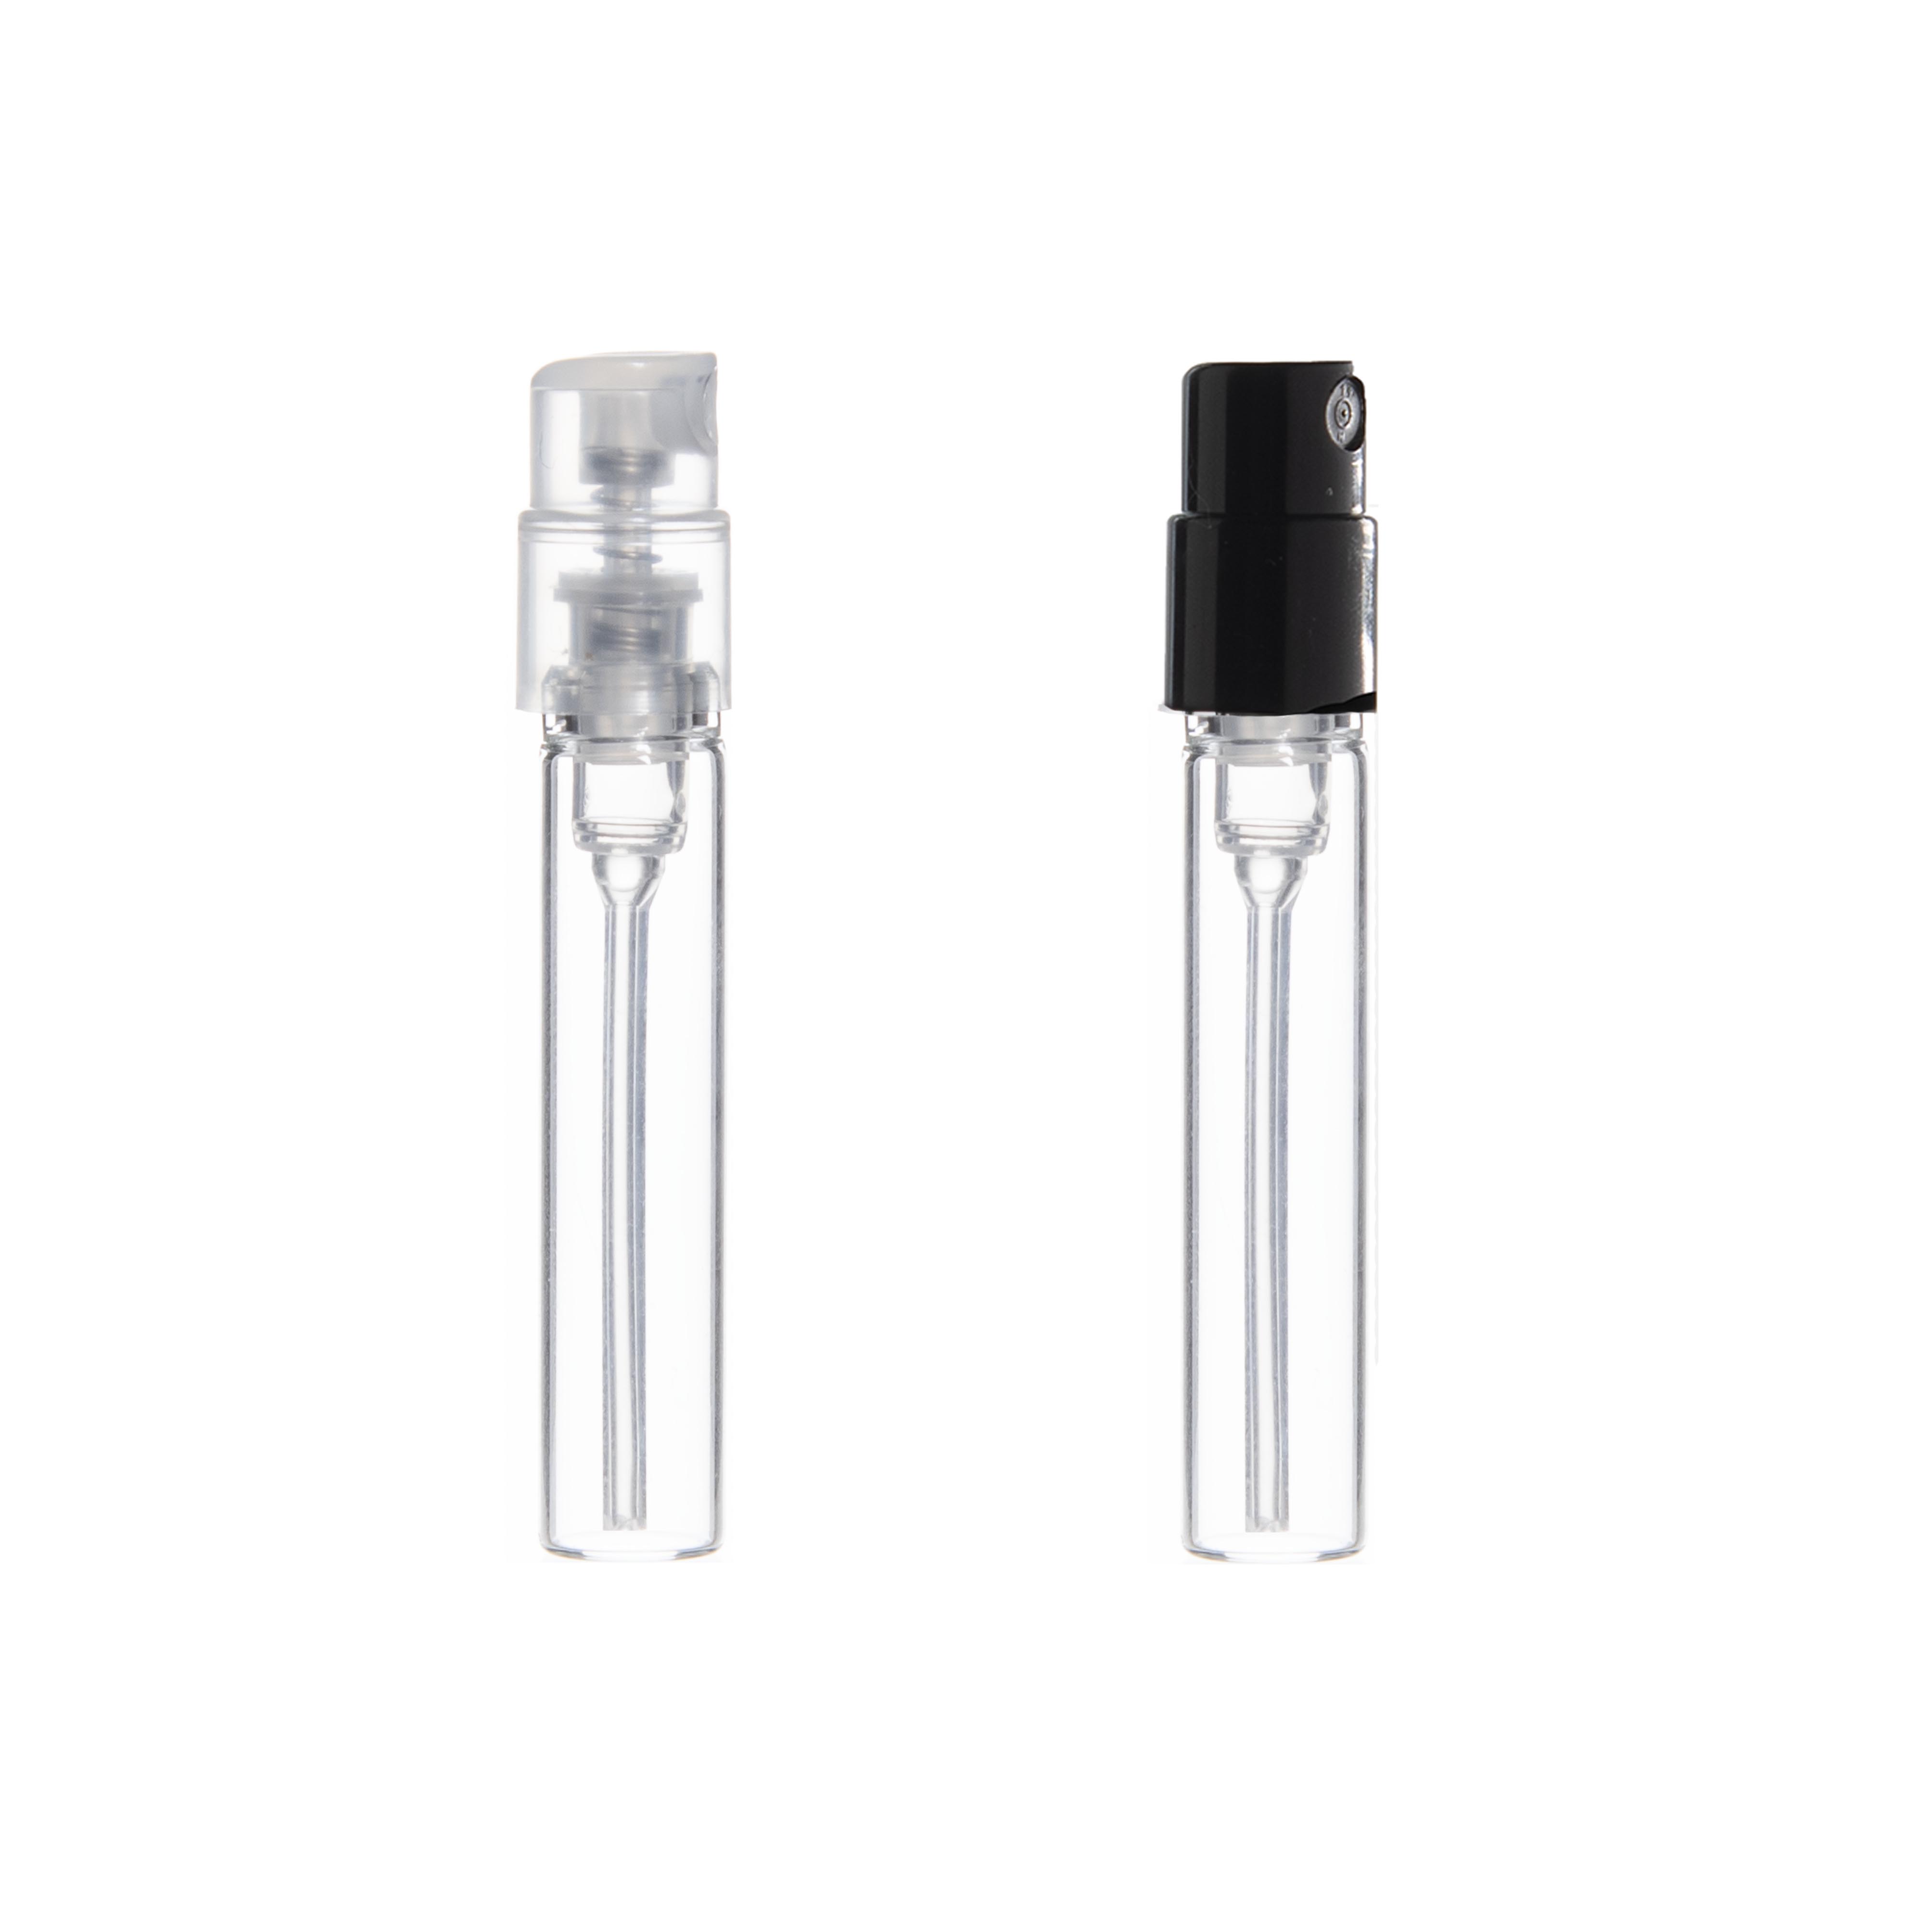 Perfume Sampler Vial (9 x 47 mm) Includes Fine Mist Sprayer